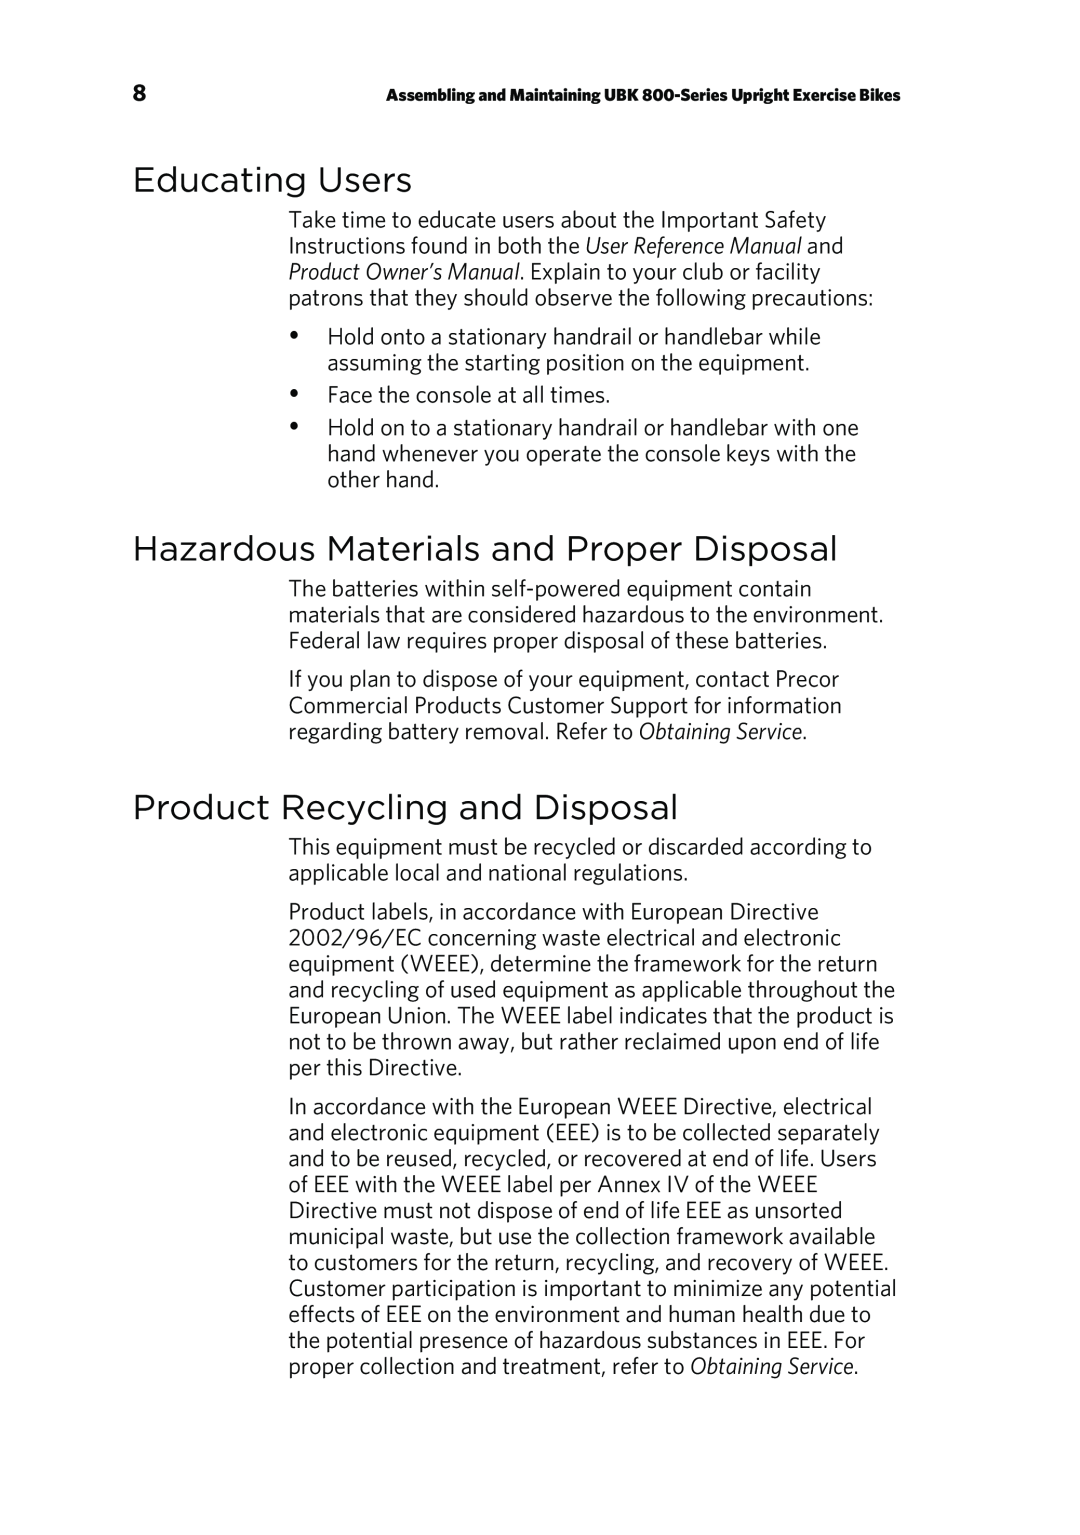 Precor P80 manual Educating Users, Hazardous Materials and Proper Disposal, Product Recycling and Disposal 